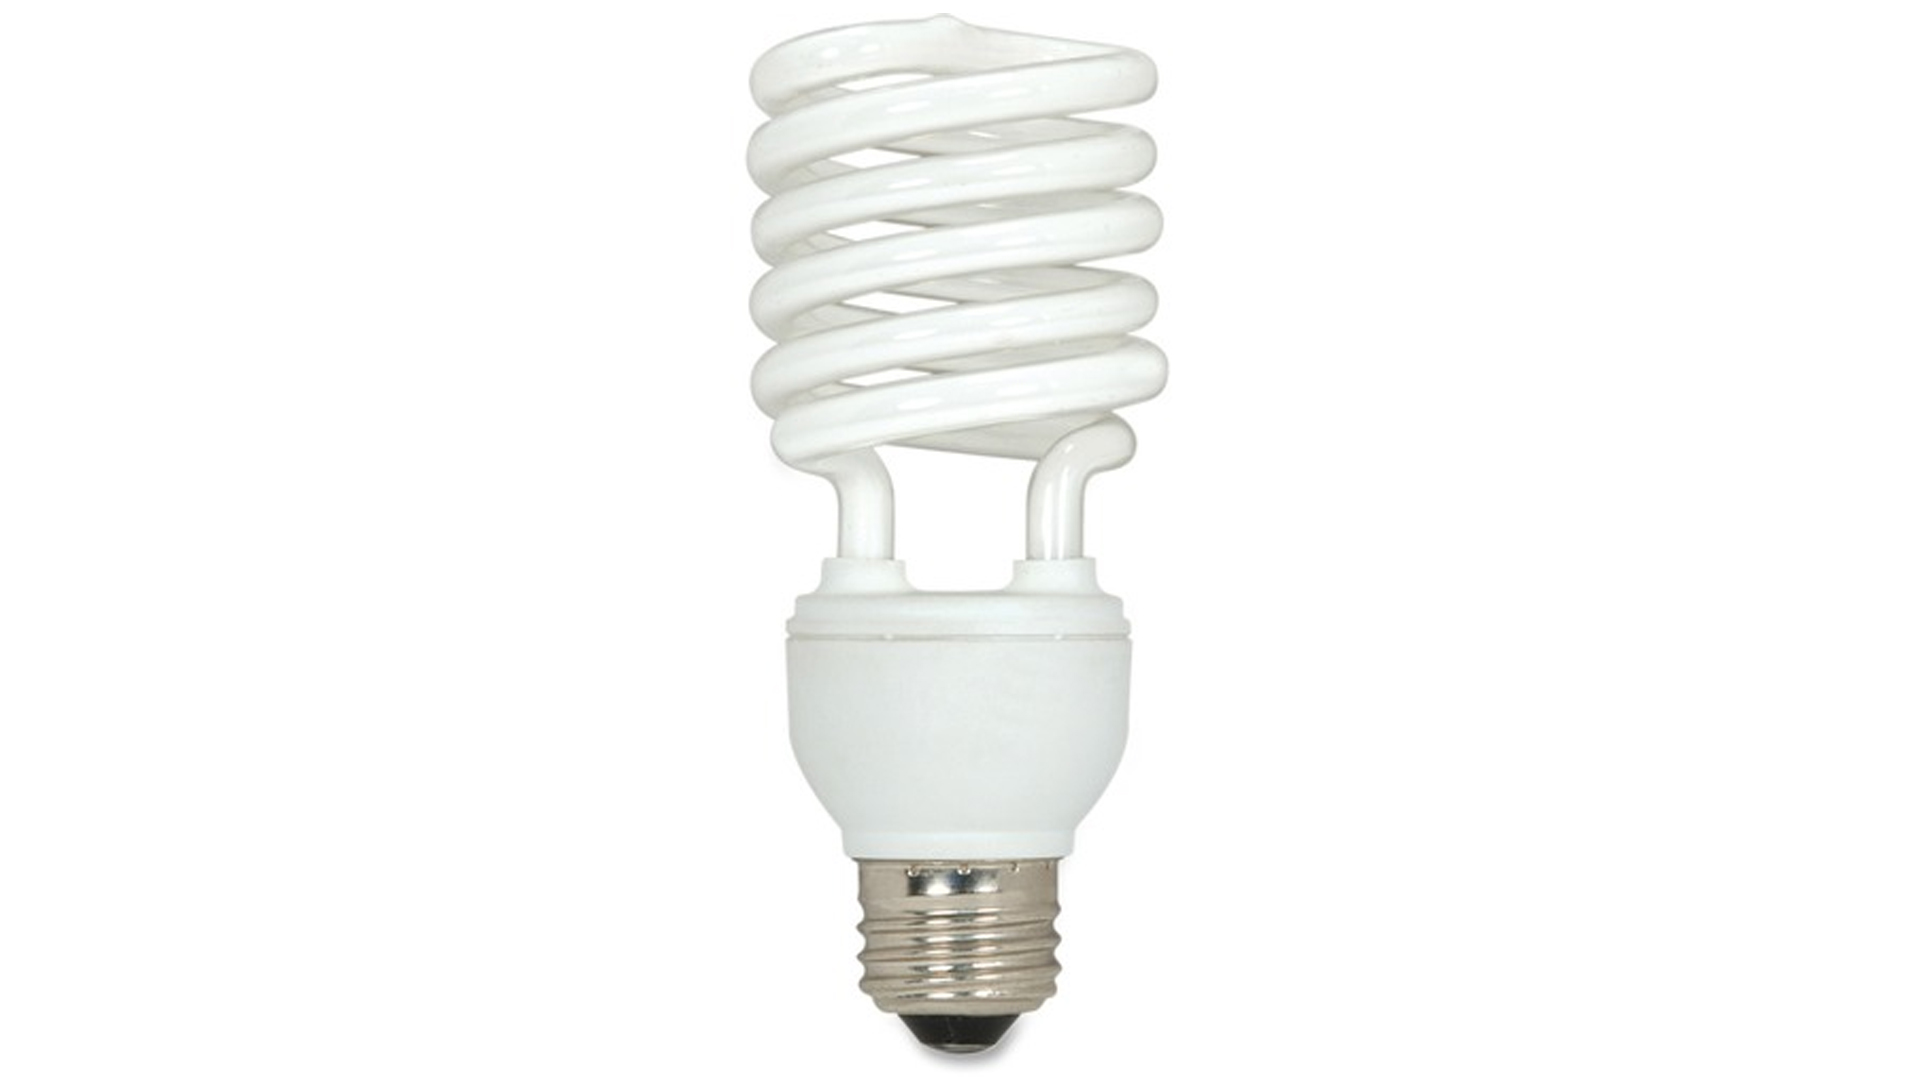 A CFL E26 bulb